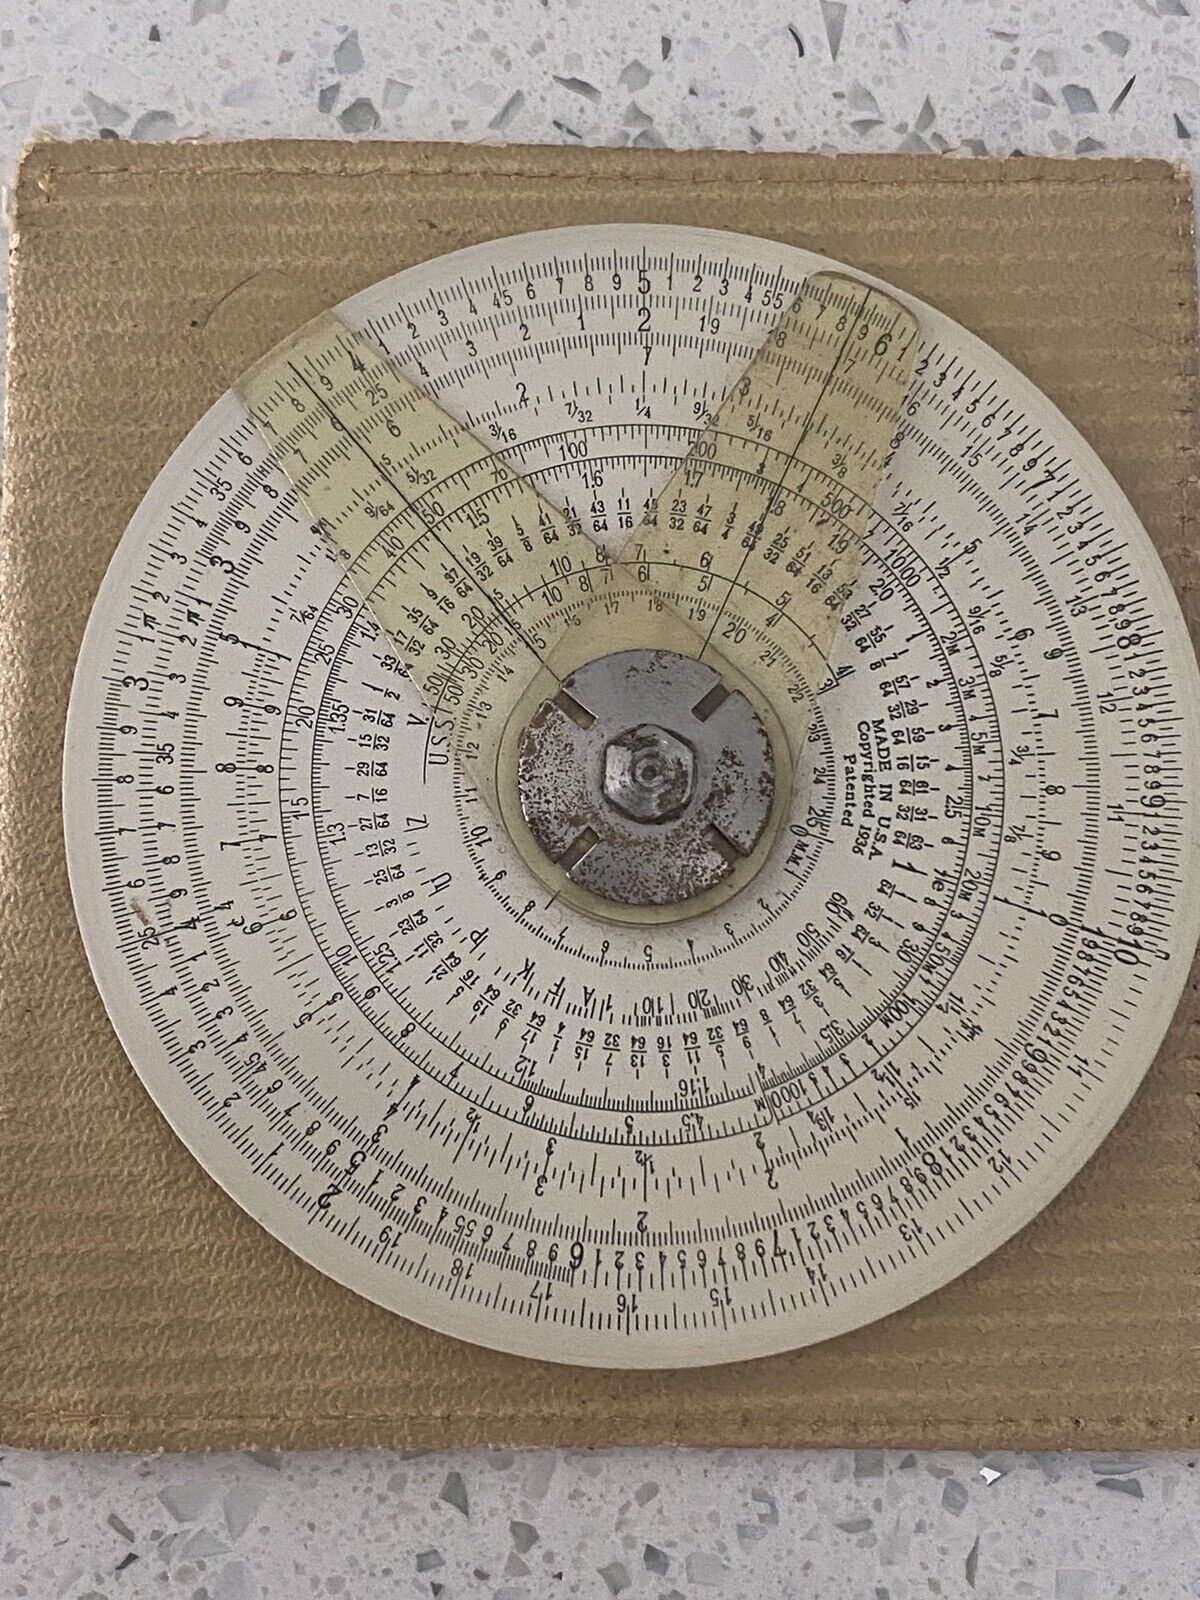 Rare Vintage Dietzgen “Binary Circular Slide Ruler”